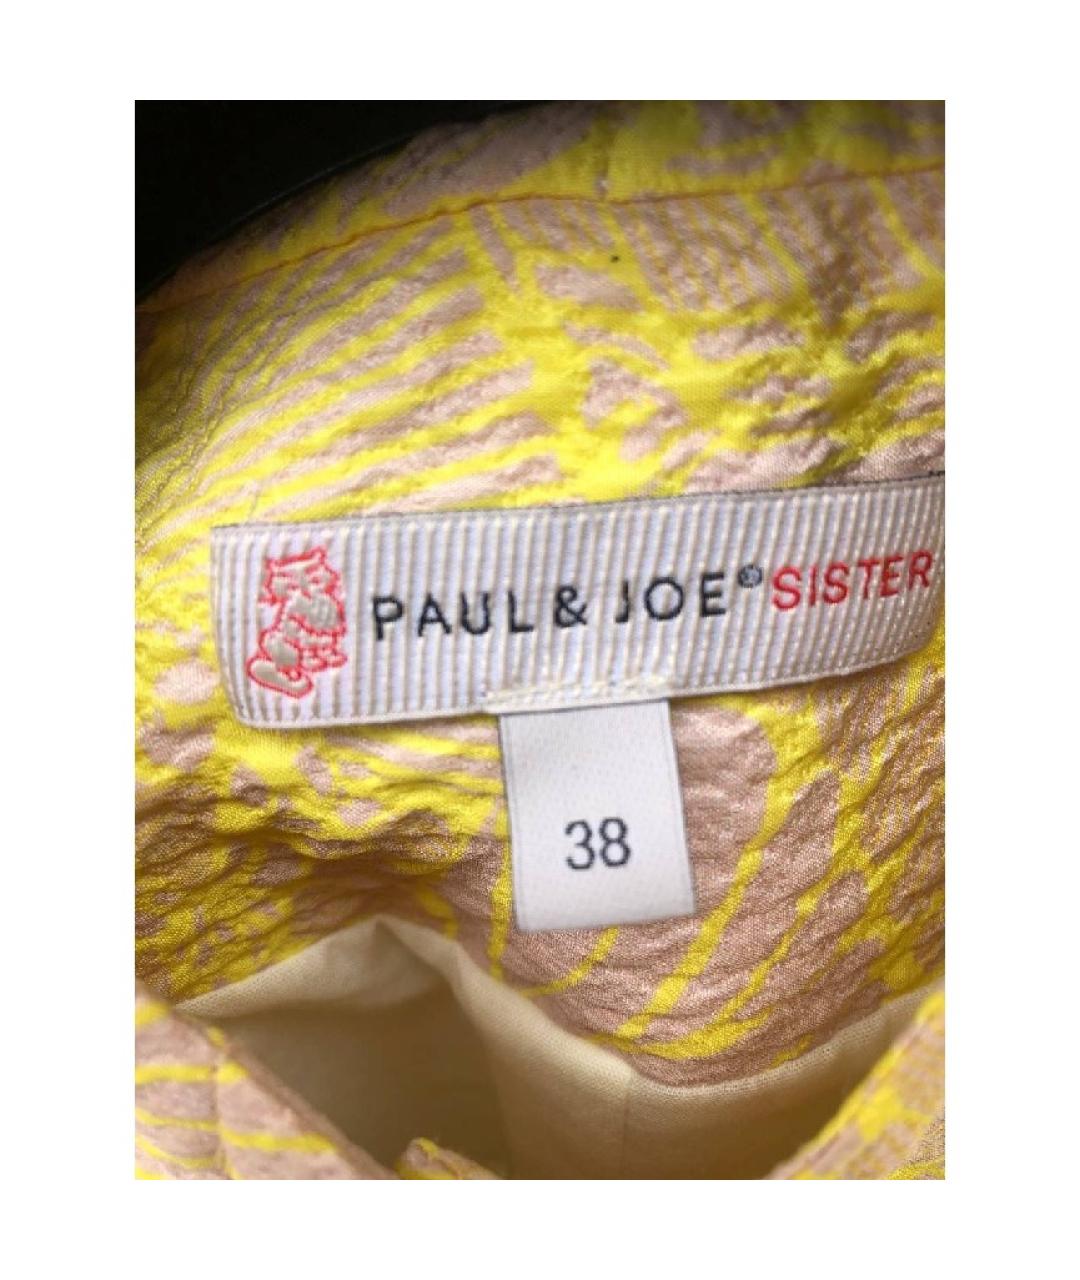 PAUL&JOE SISTER Желтый хлопковый жакет/пиджак, фото 3